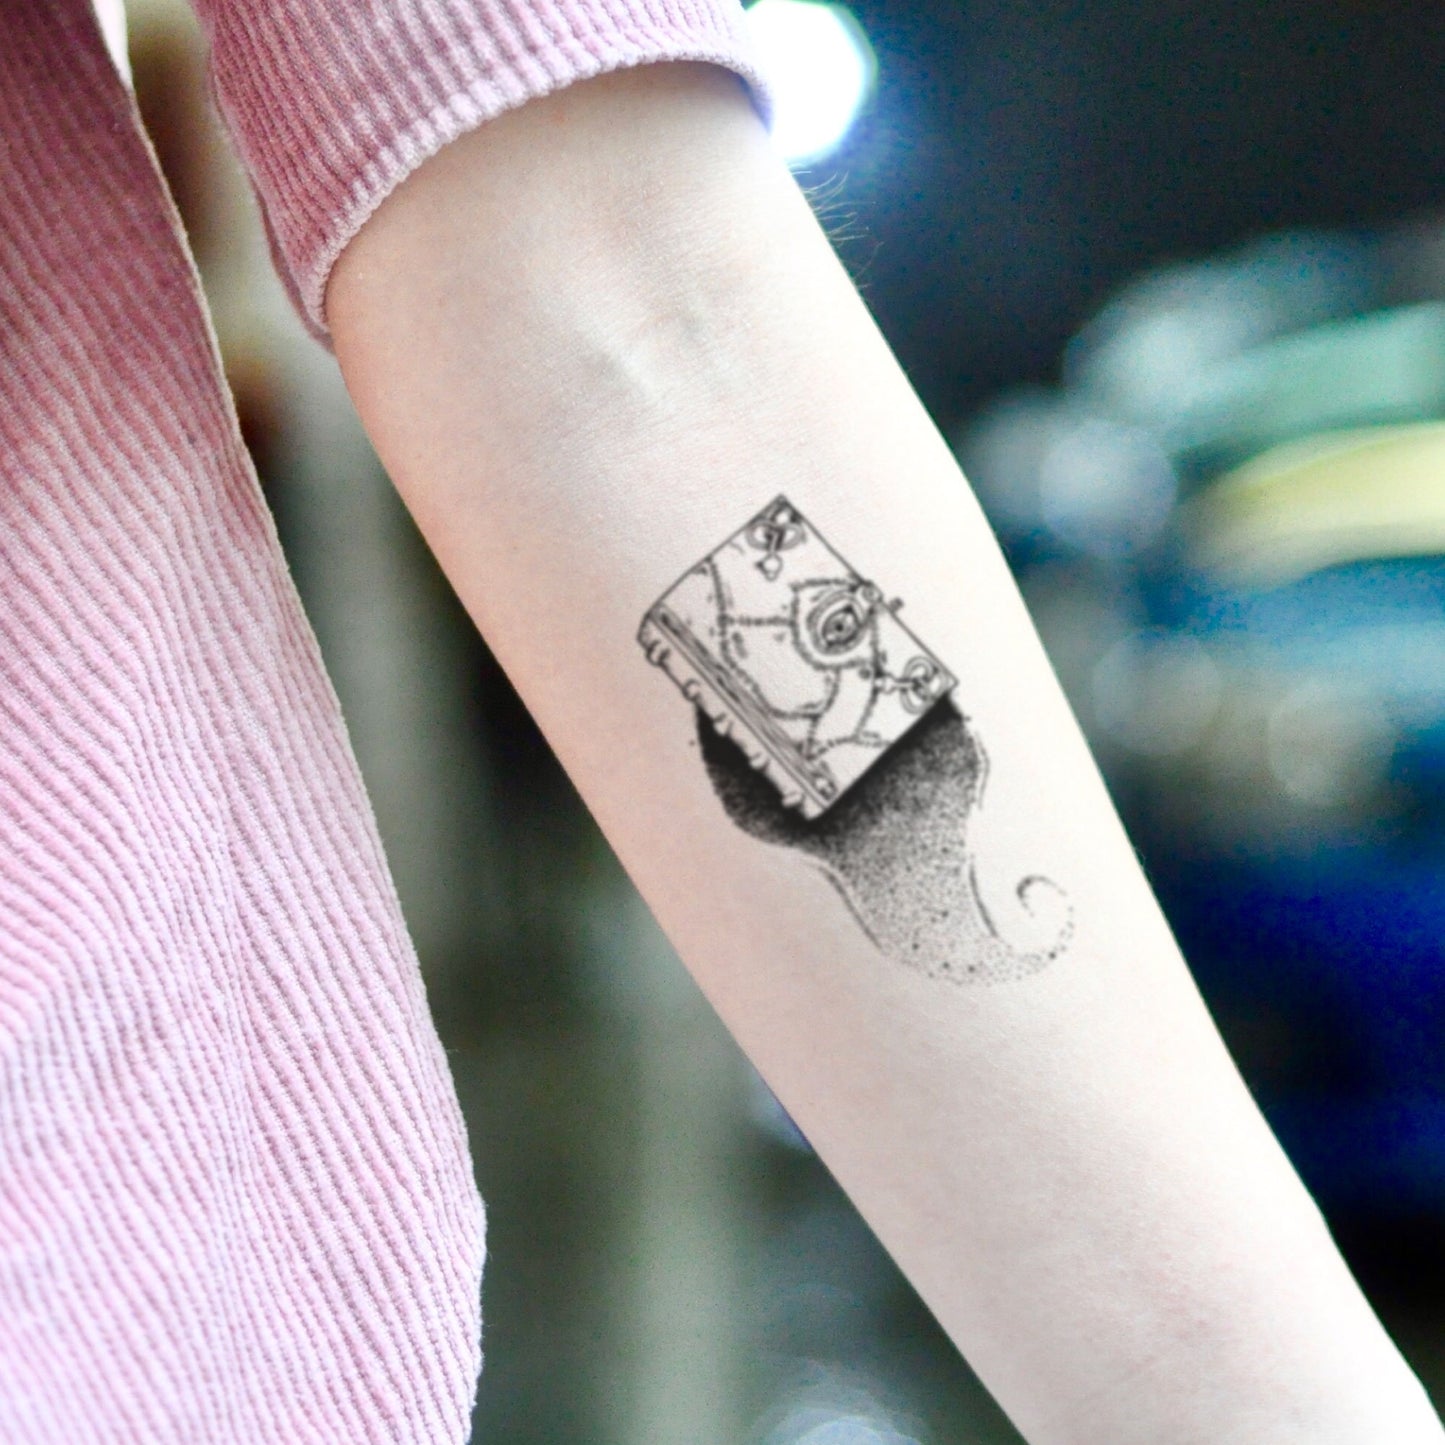 fake small hocus pocus spellbook illustrative temporary tattoo sticker design idea on inner arm